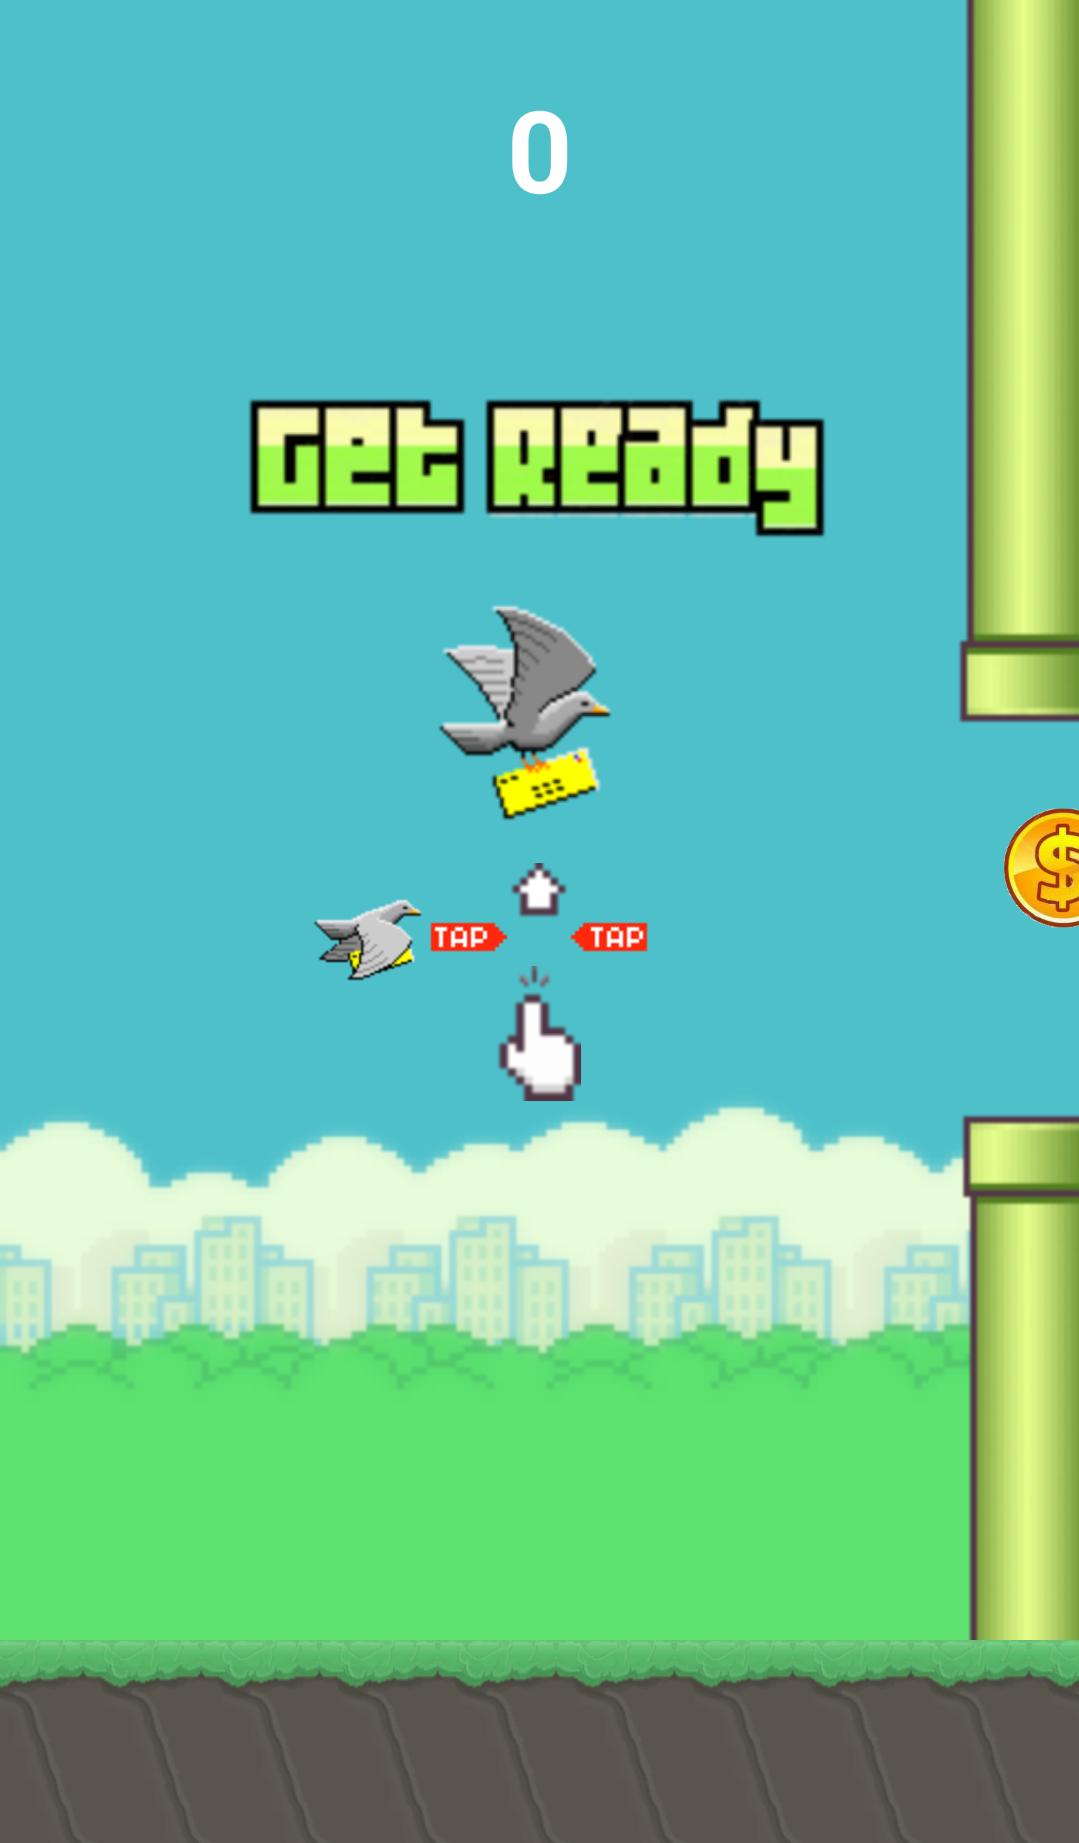 Flappy birds games